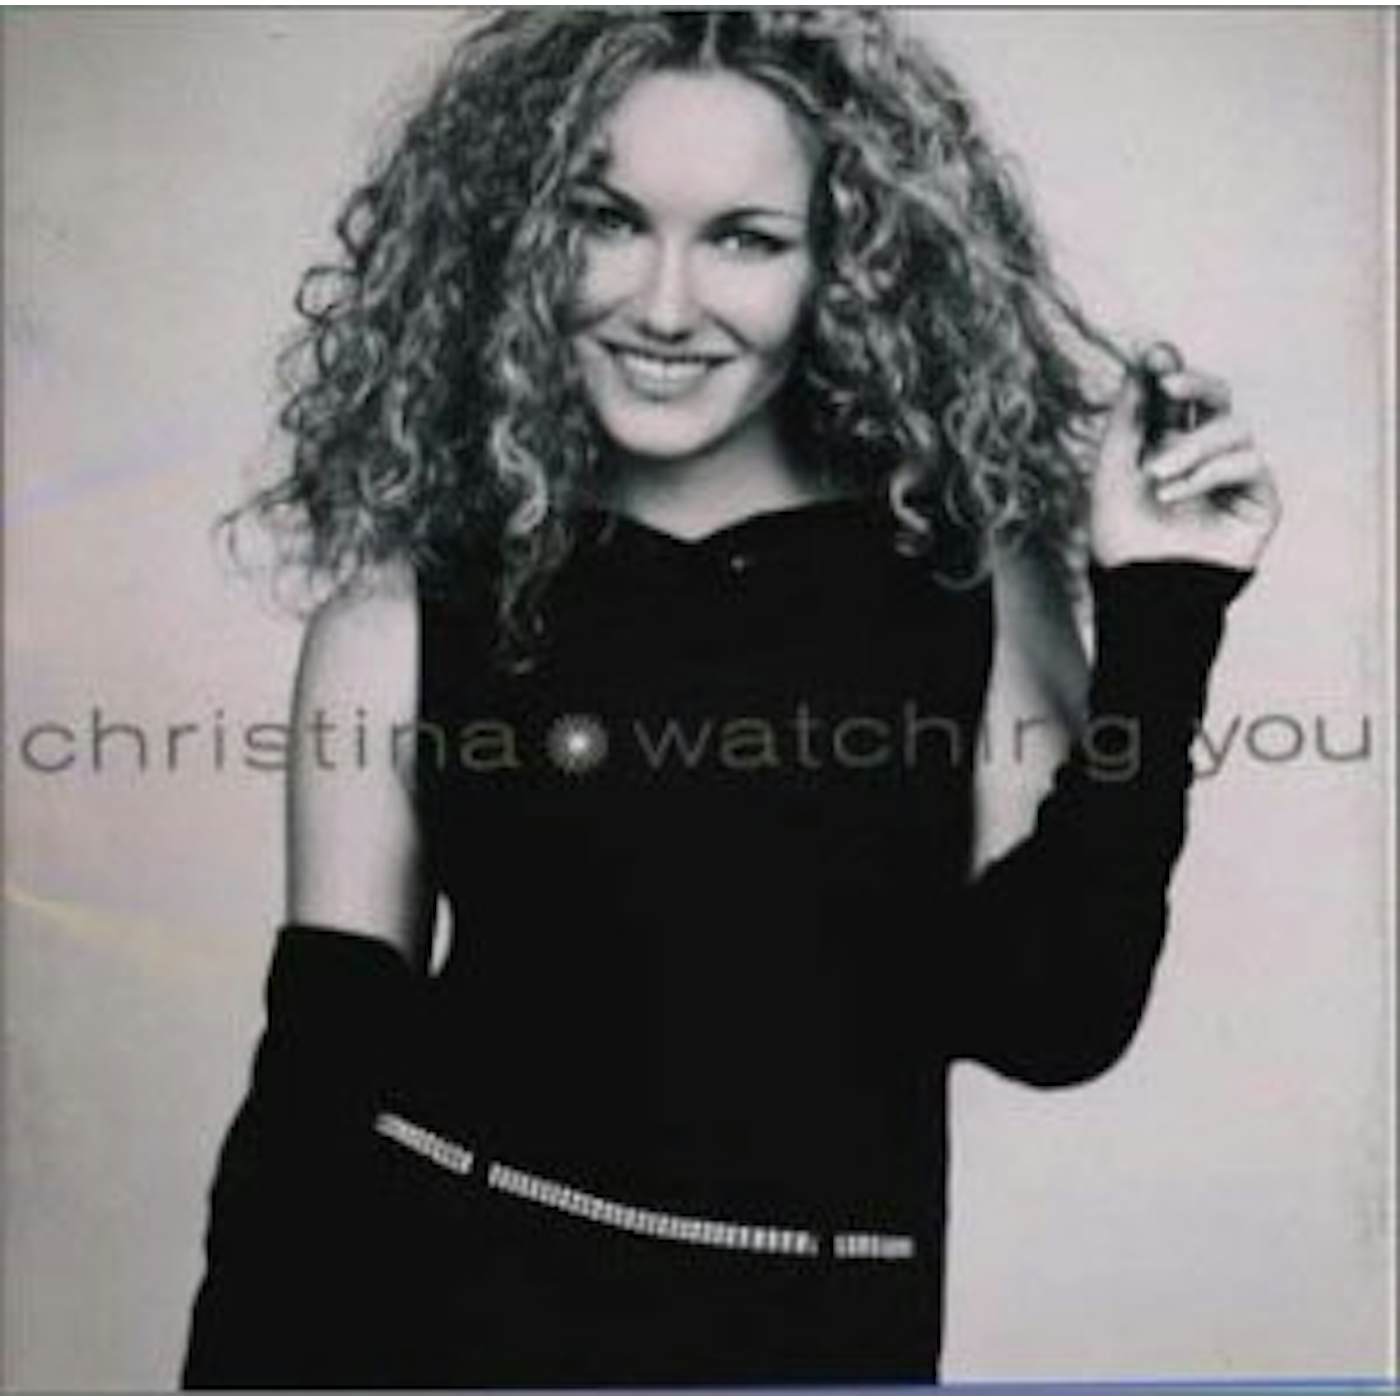 Christina WATCHING YOU CD